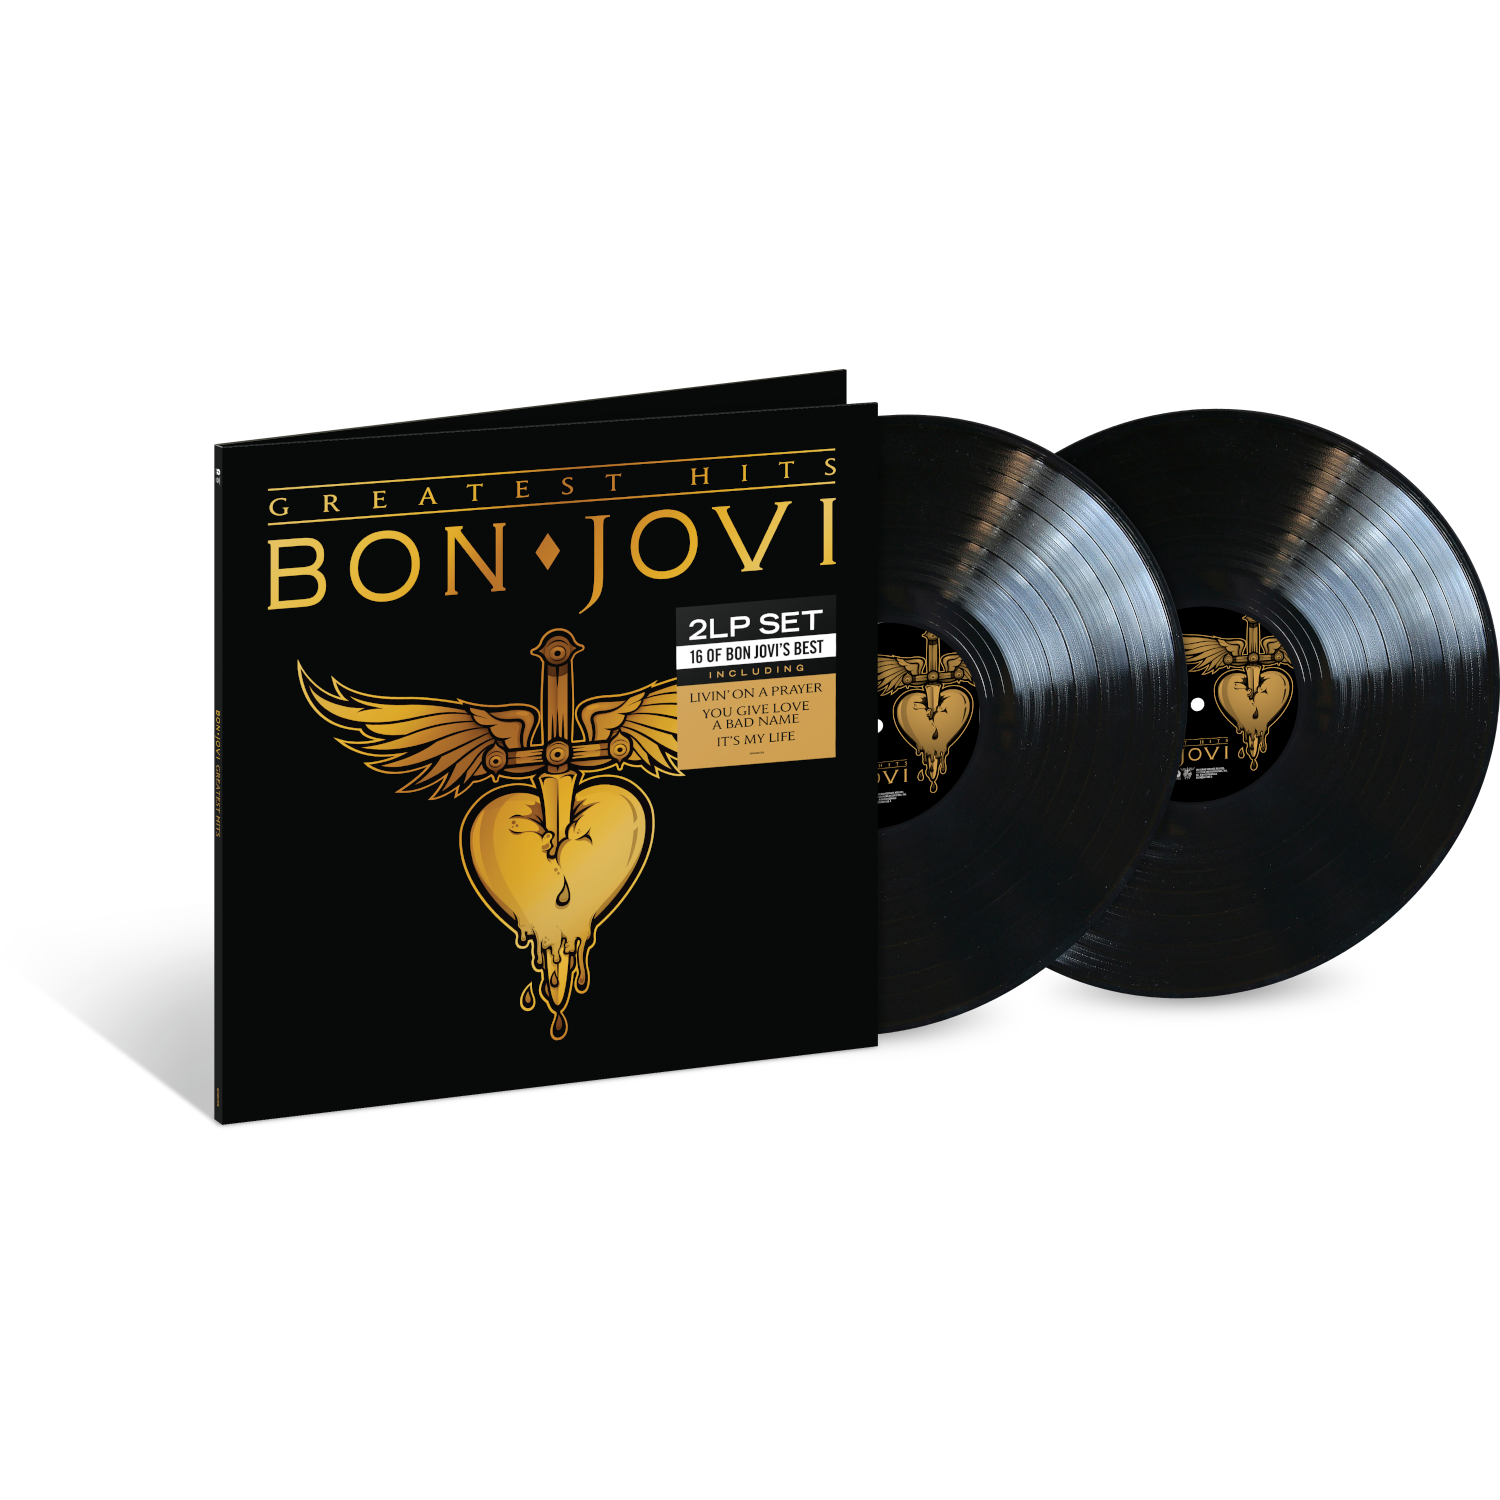 https://images.bravado.de/prod/product-assets/product-asset-data/bon-jovi/bon-jovi-d2c-tt/products/509131/web/459598/image-thumb__459598__3000x3000_original/Bon-Jovi-Greatest-Hits-Vinyl-Album-509131-459598.a77eb571.png